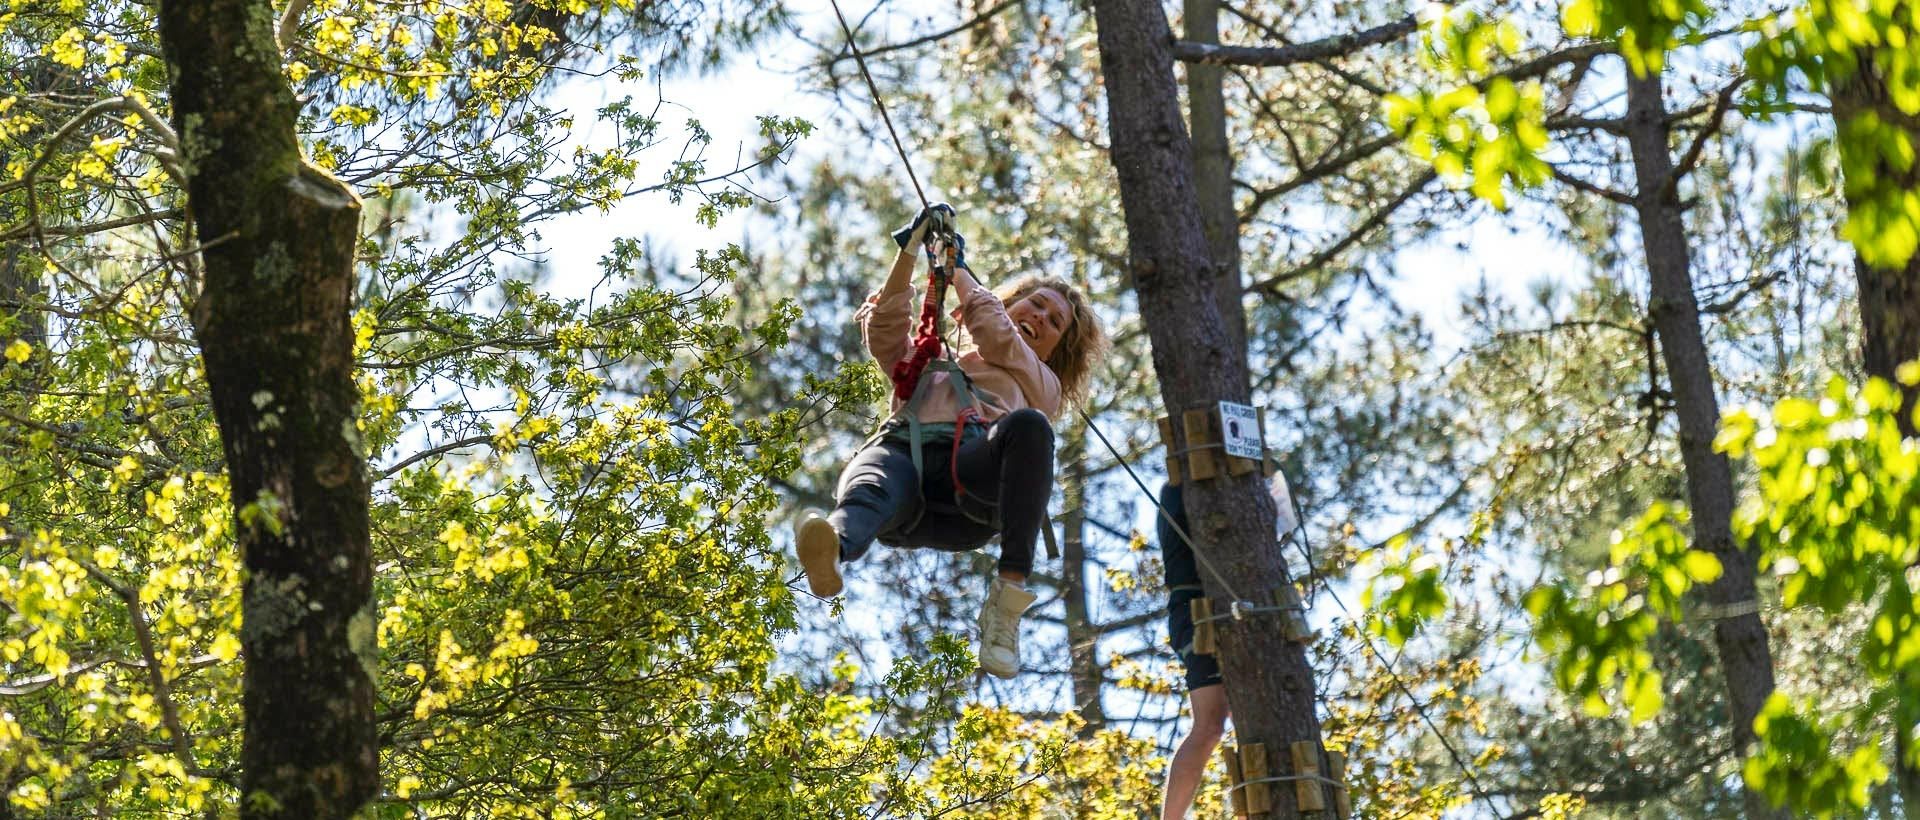 Campsite with tree-top adventure course